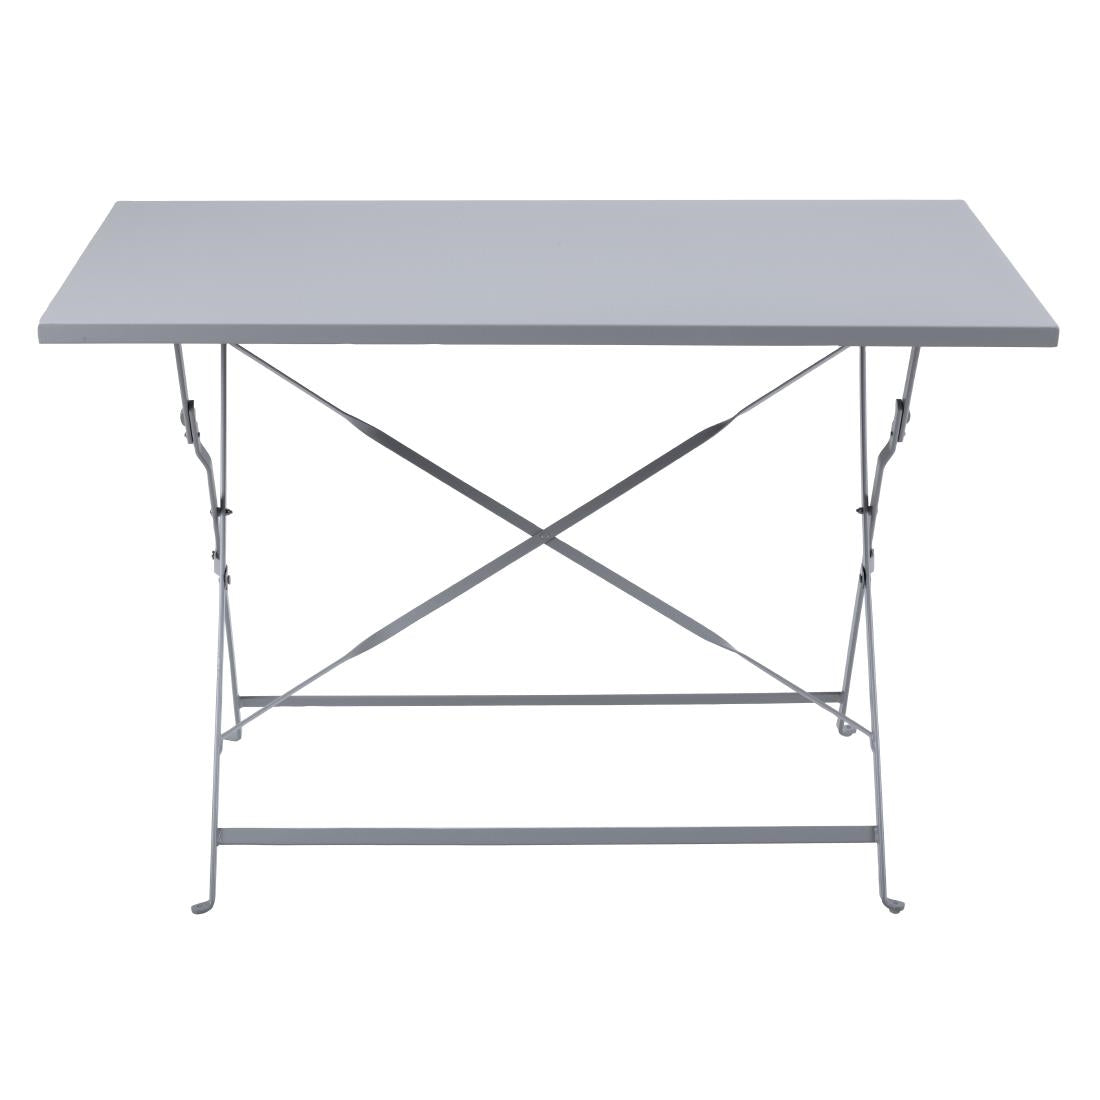 CH969 Bolero Pavement Style Folding Table Grey 1100mm x 700mm JD Catering Equipment Solutions Ltd